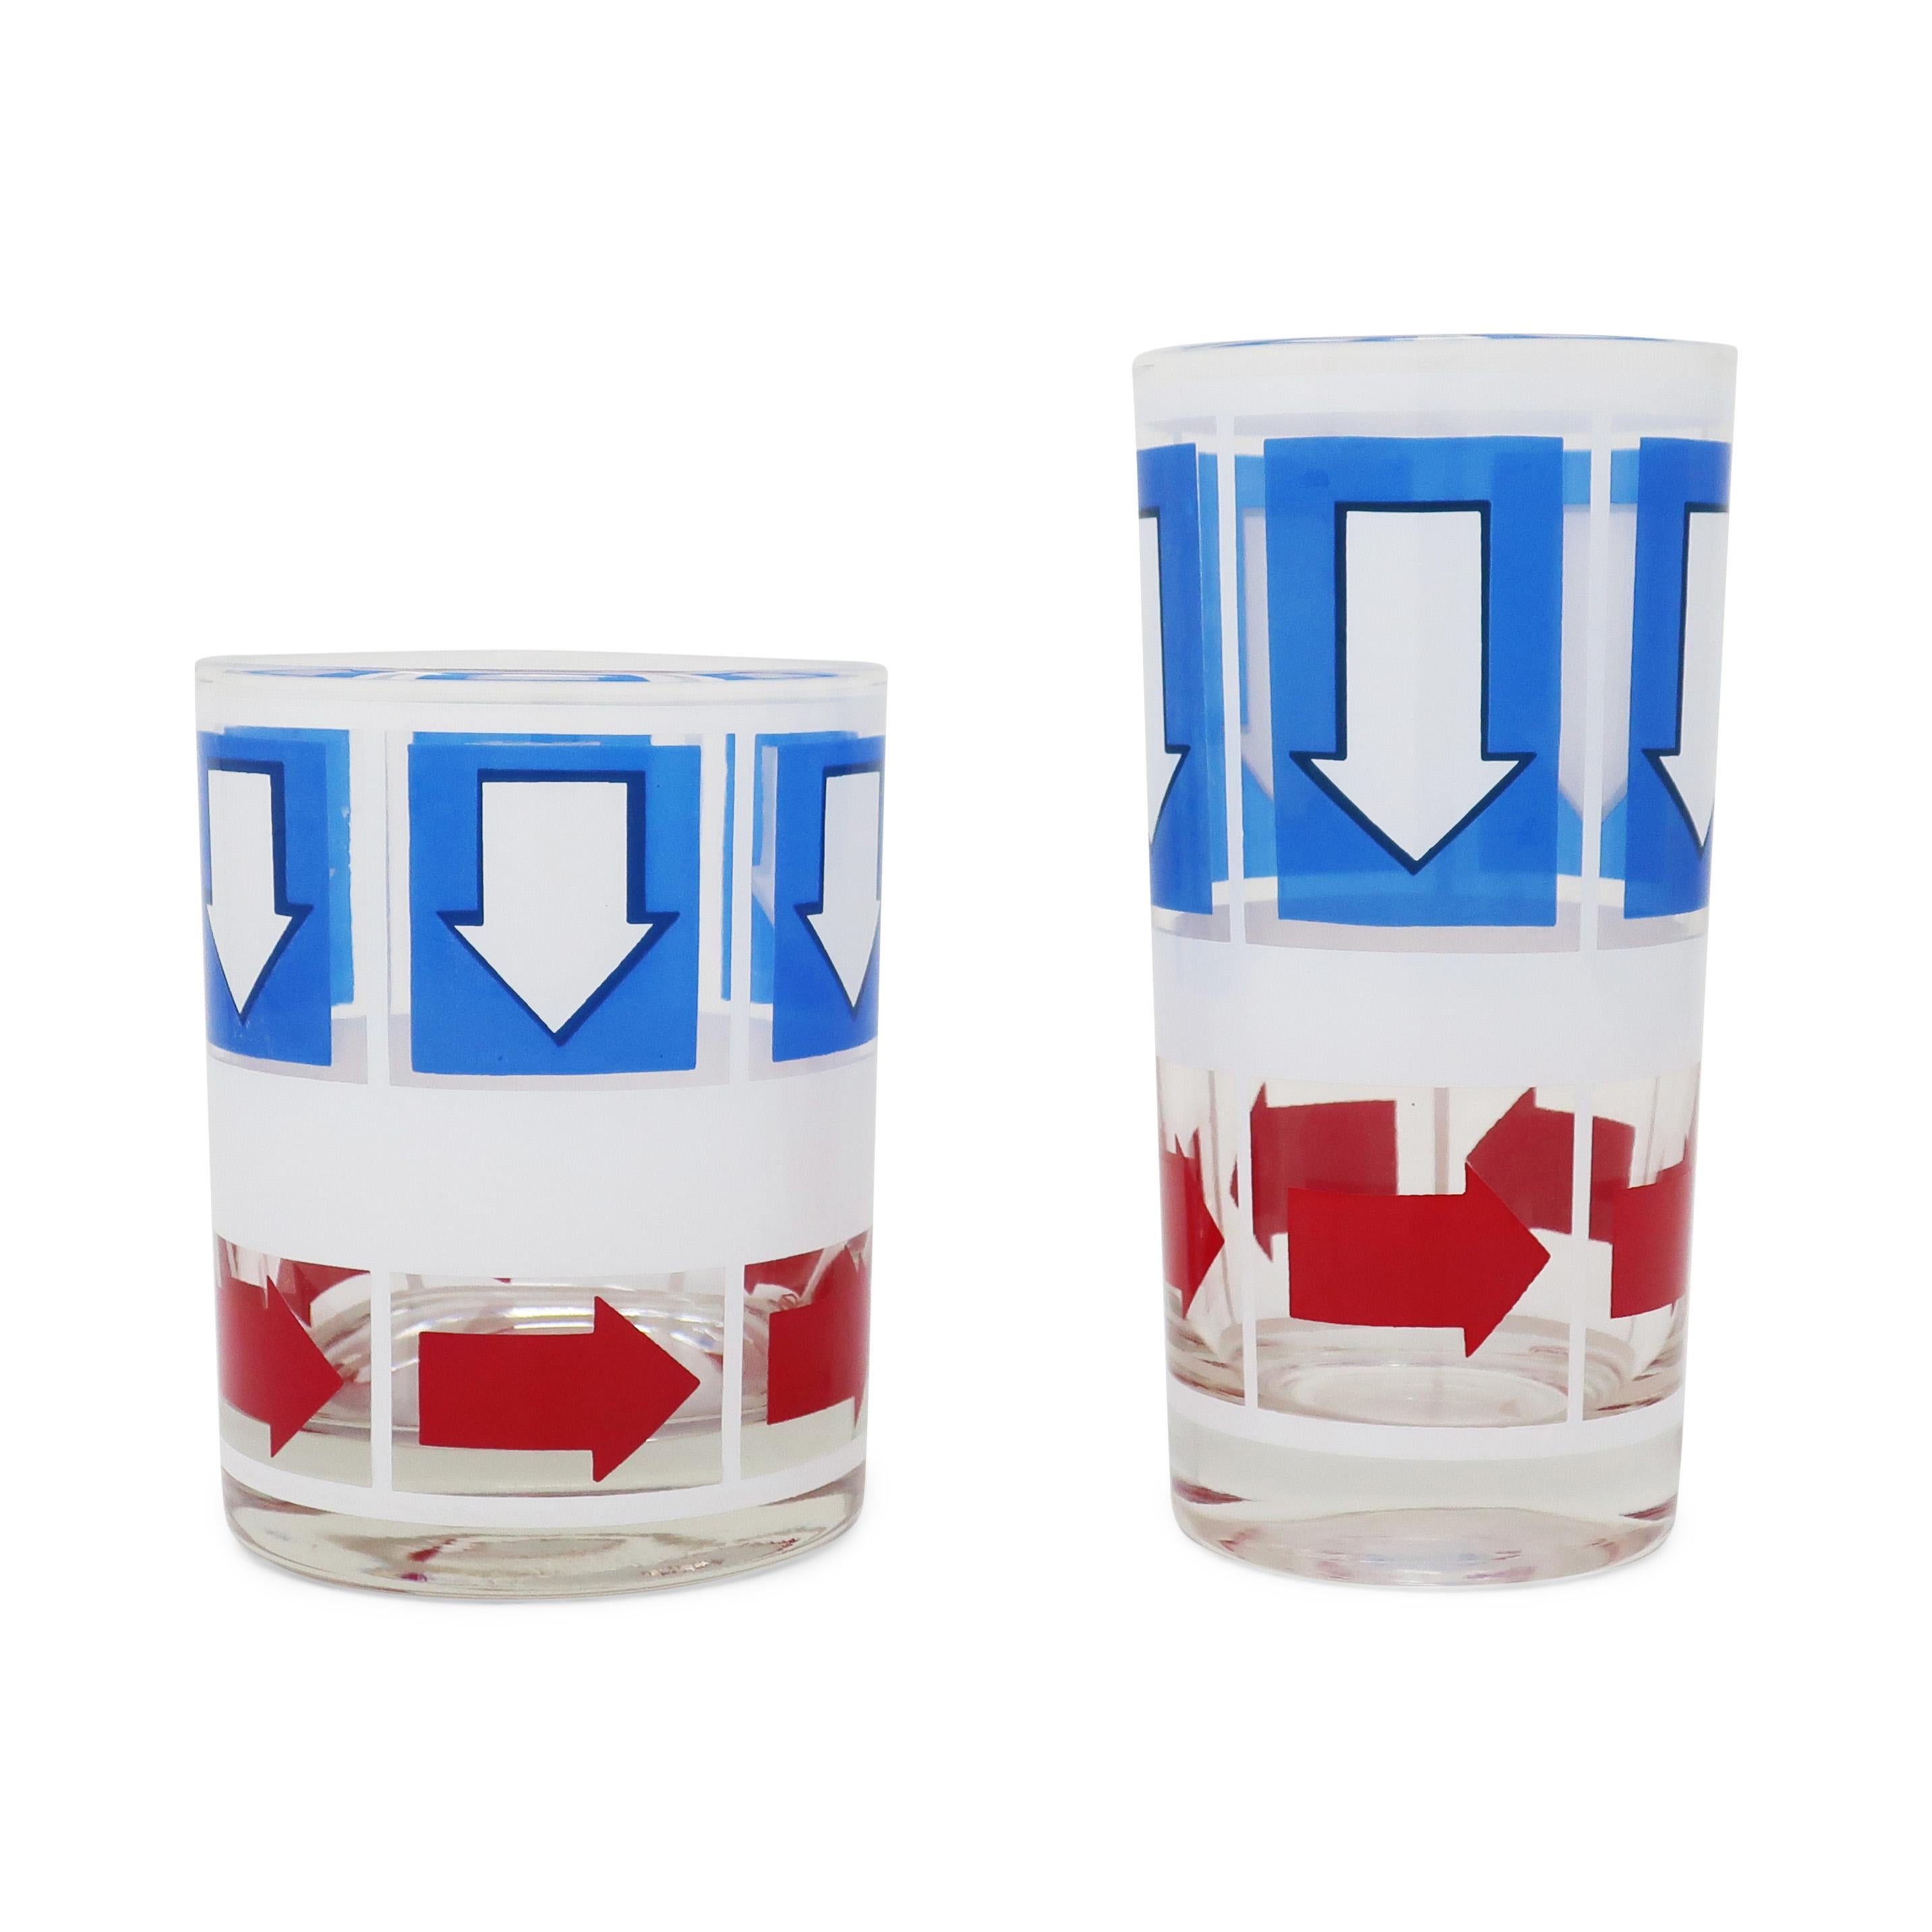 1970s, Pop Art Red White & Blue Arrow Glasses by Bartrix/Cera Glass, Set of 16 1